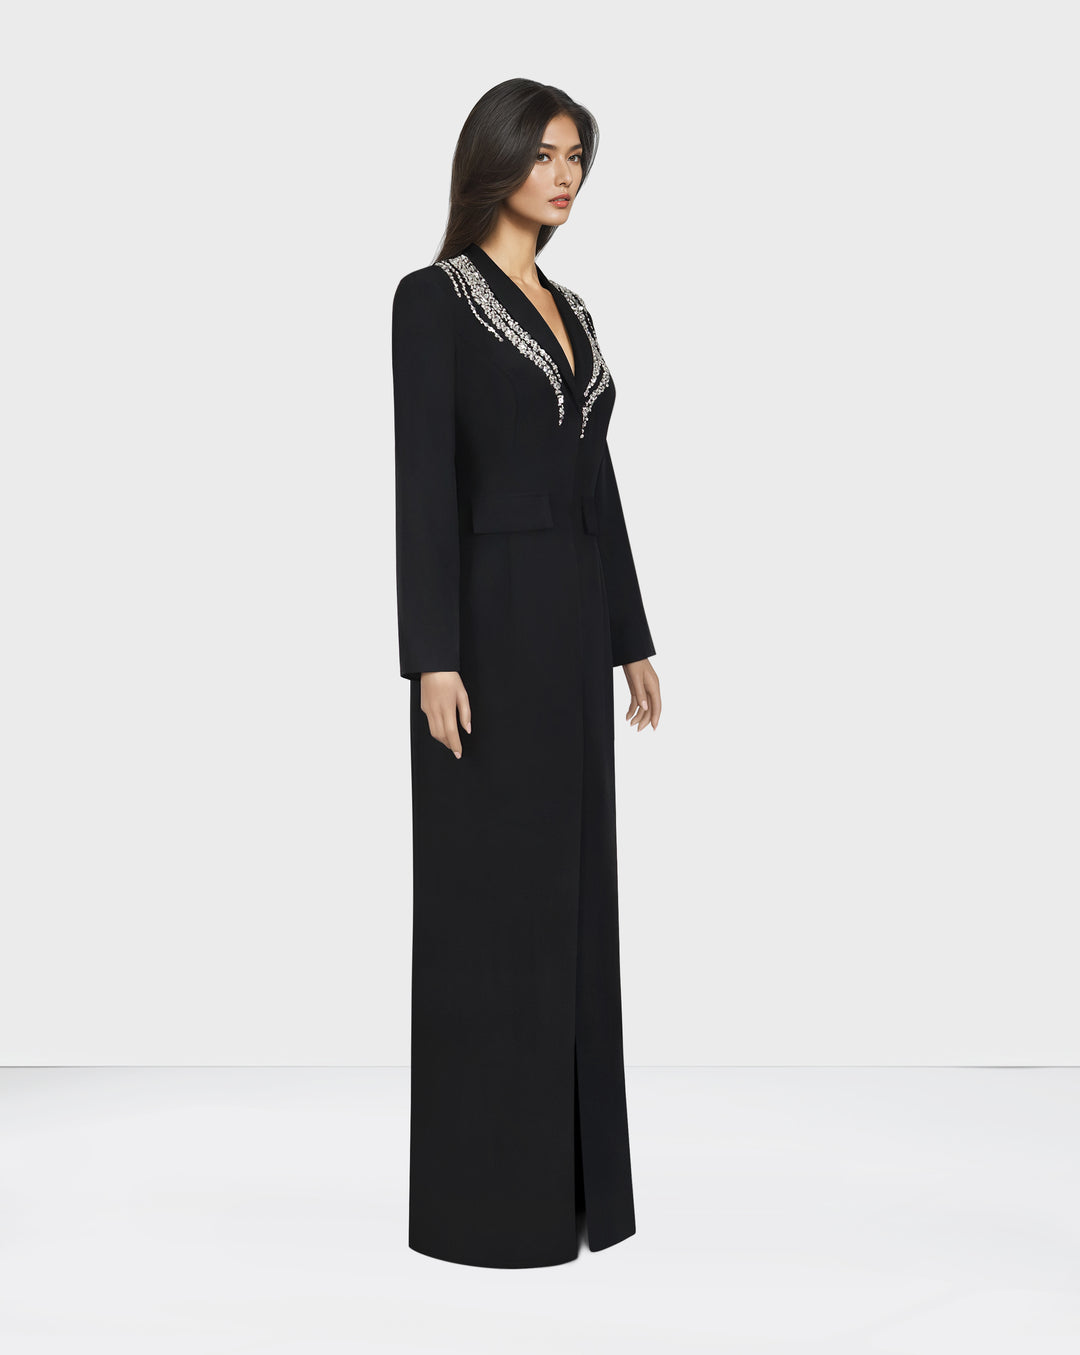 Blazer black dress with beaded shoulders